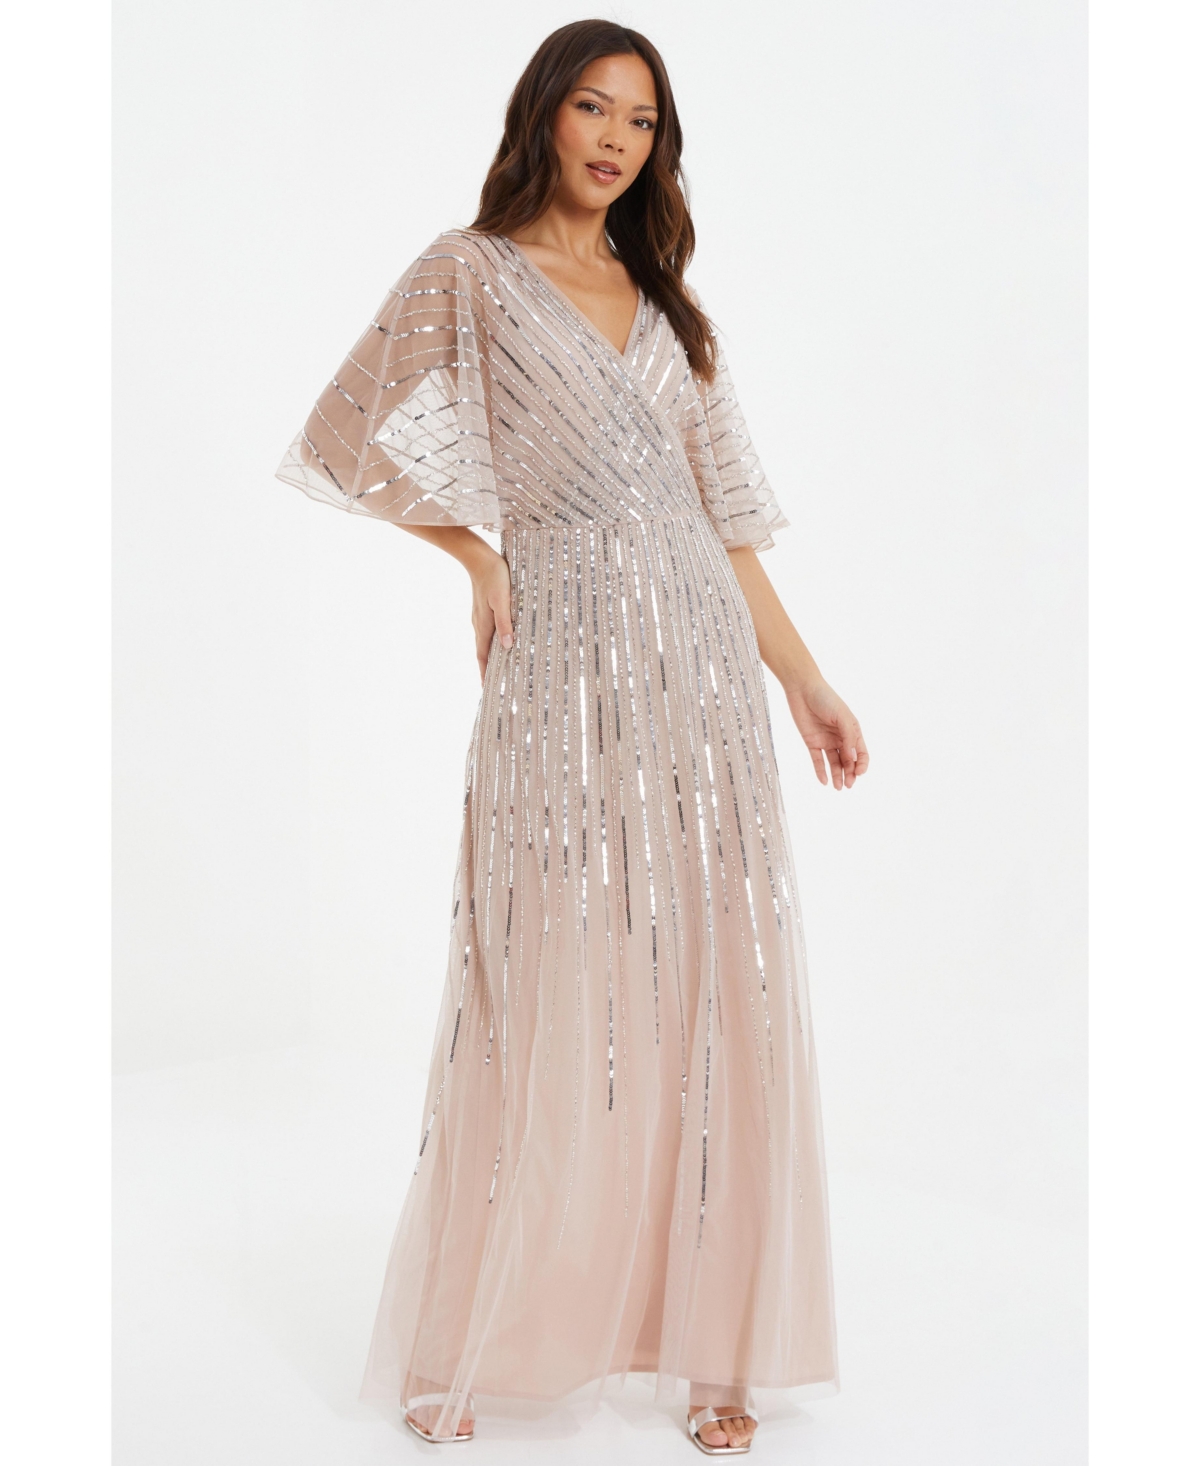 Women's Embellished Sequin Evening Dress - Neutral